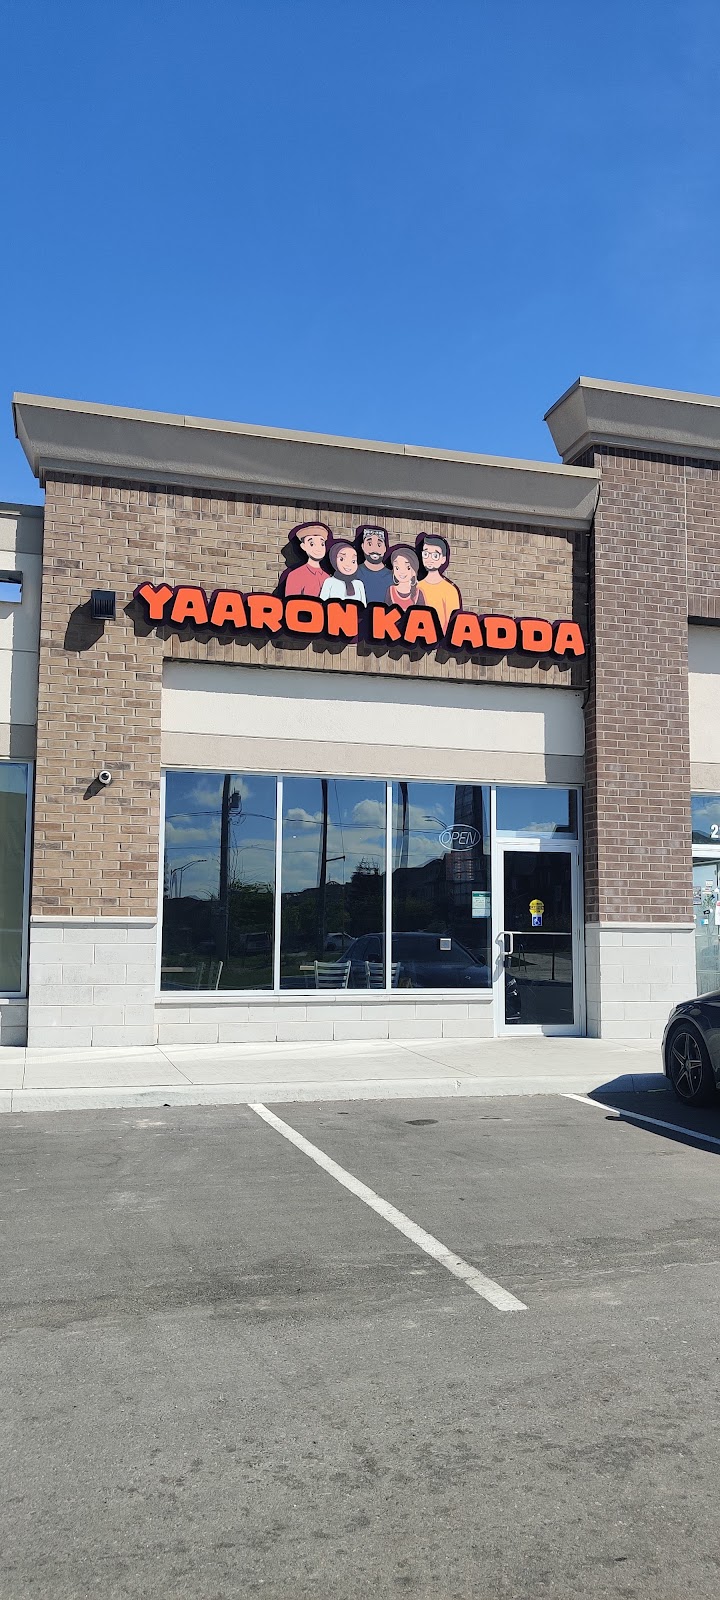 Yaaron Ka Adda | cafe | 3920 Eglinton Ave W, Mississauga, ON L5M 8A7, Canada | 9055699222 OR +1 905-569-9222